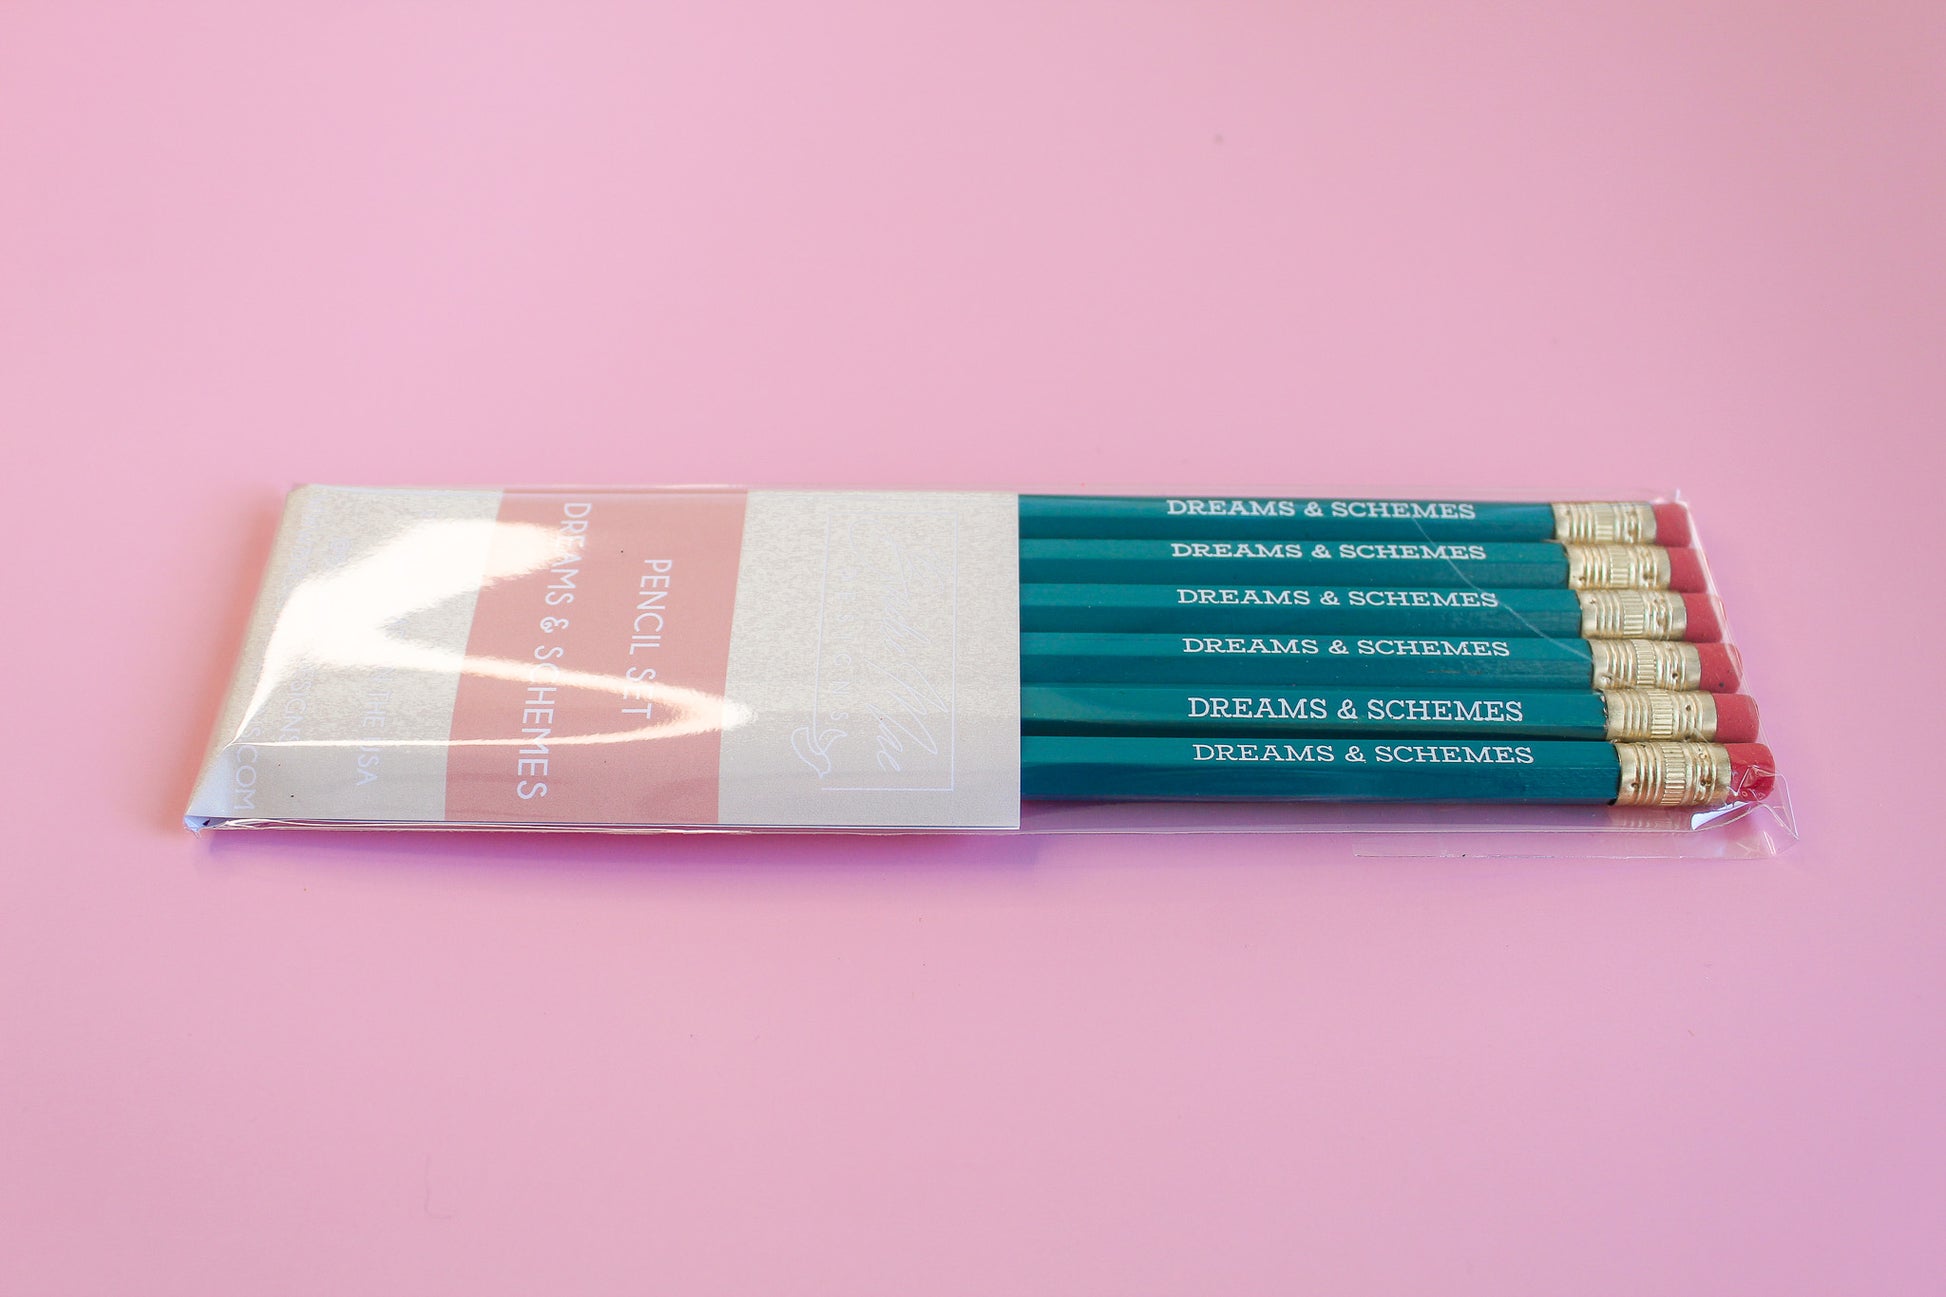 Dream Big Pencil Set, Stationery Gift, Motivational Pencil